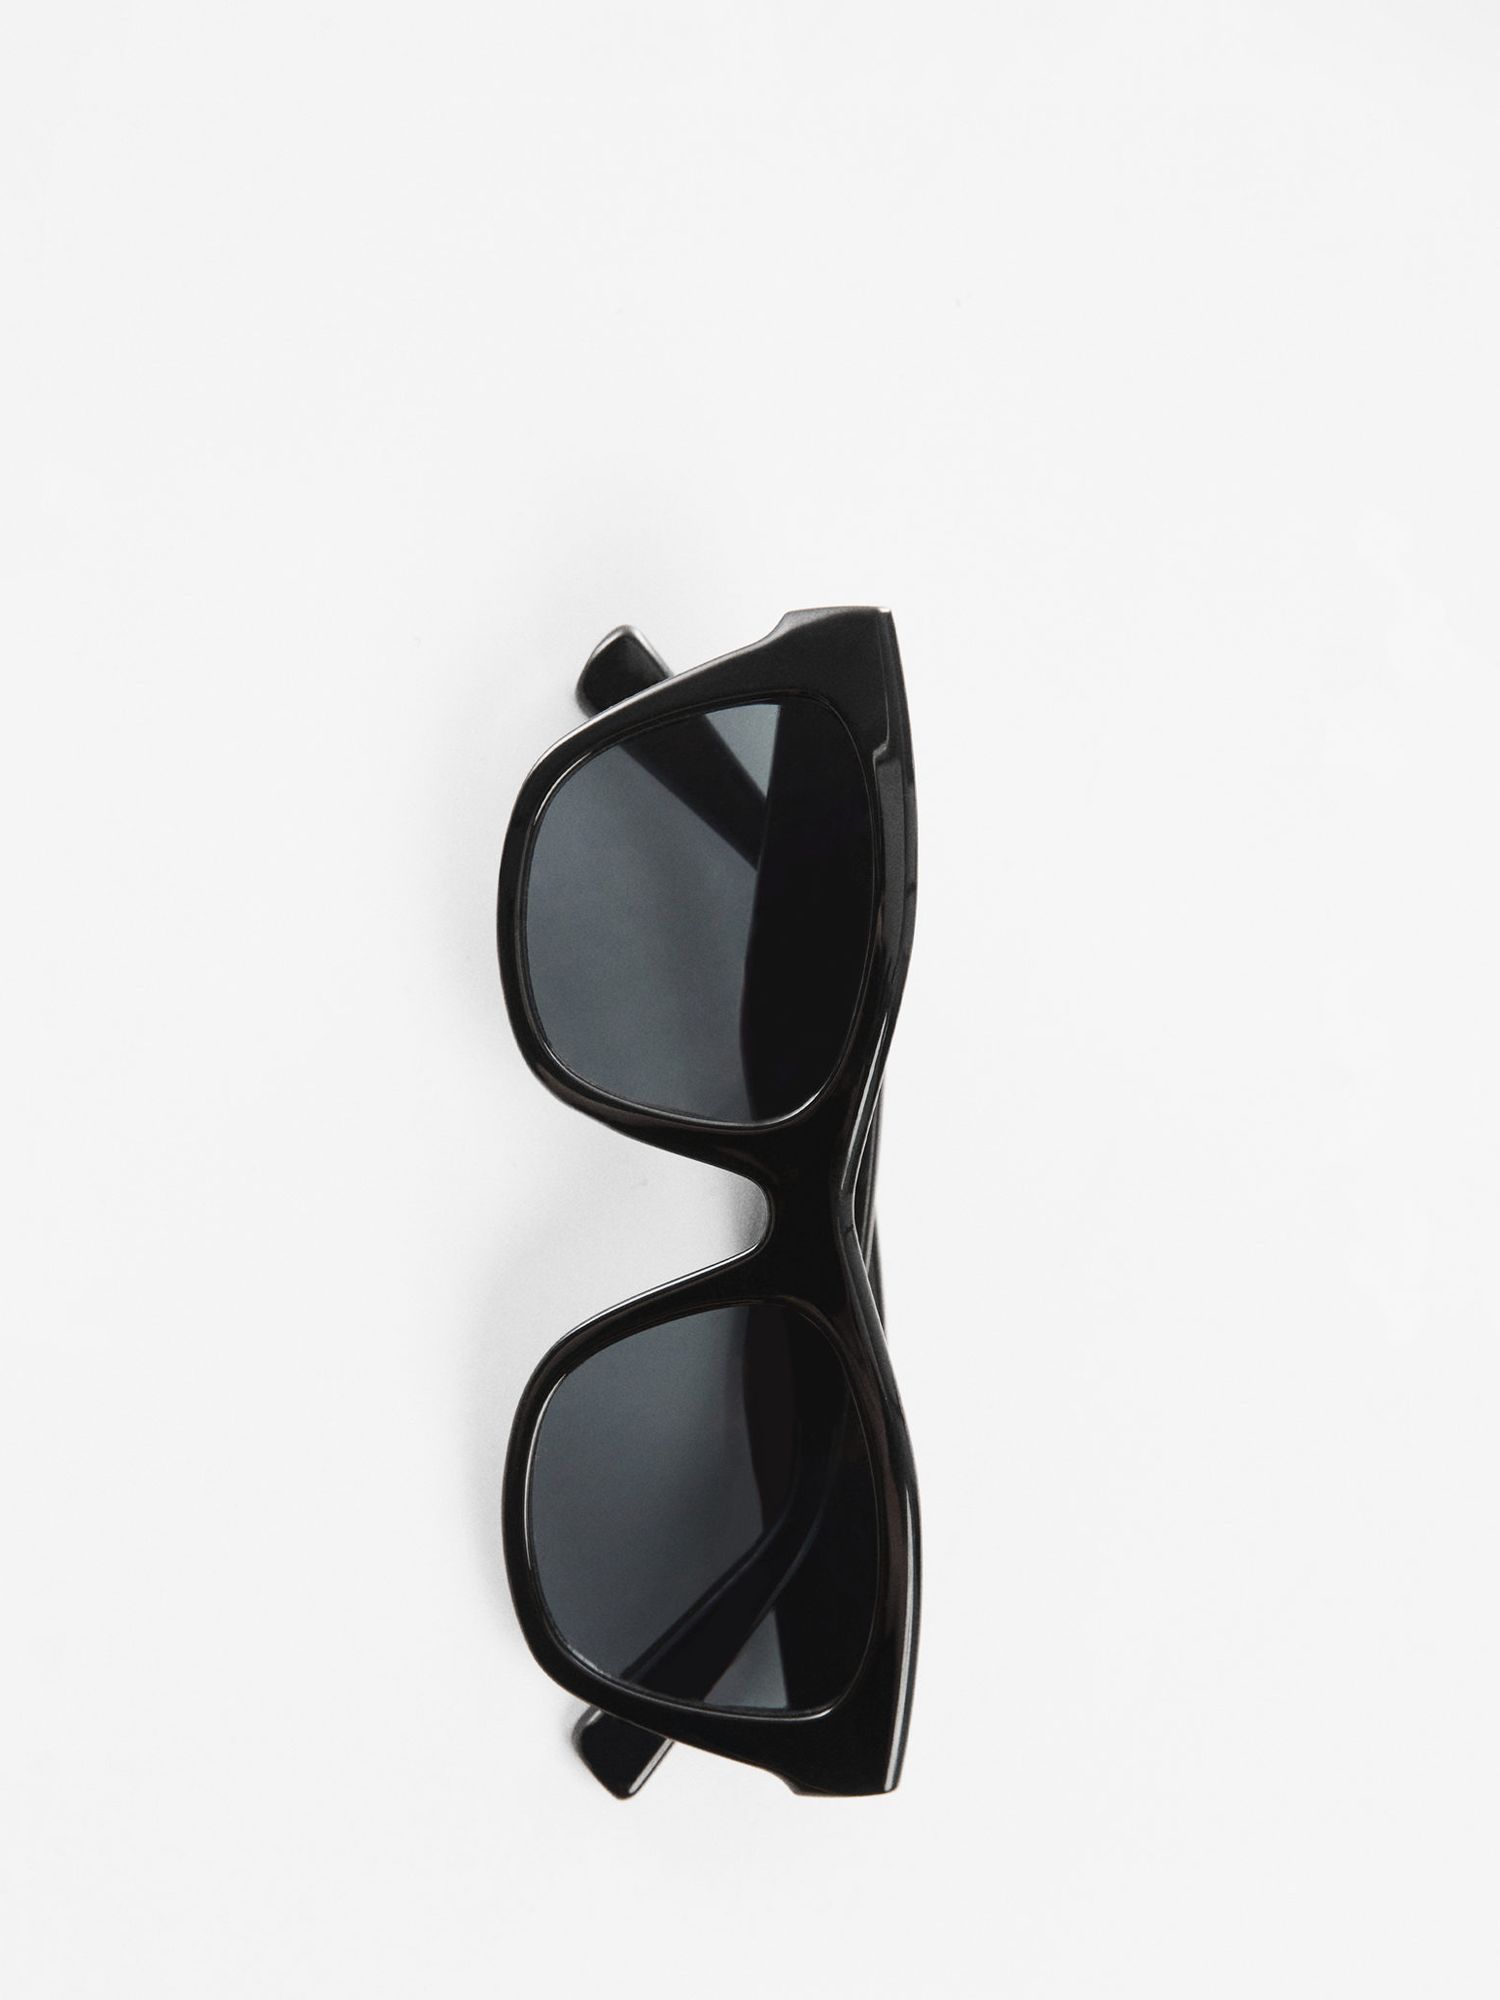 Mango Women's Mara Square Sunglasses, Black, One Size